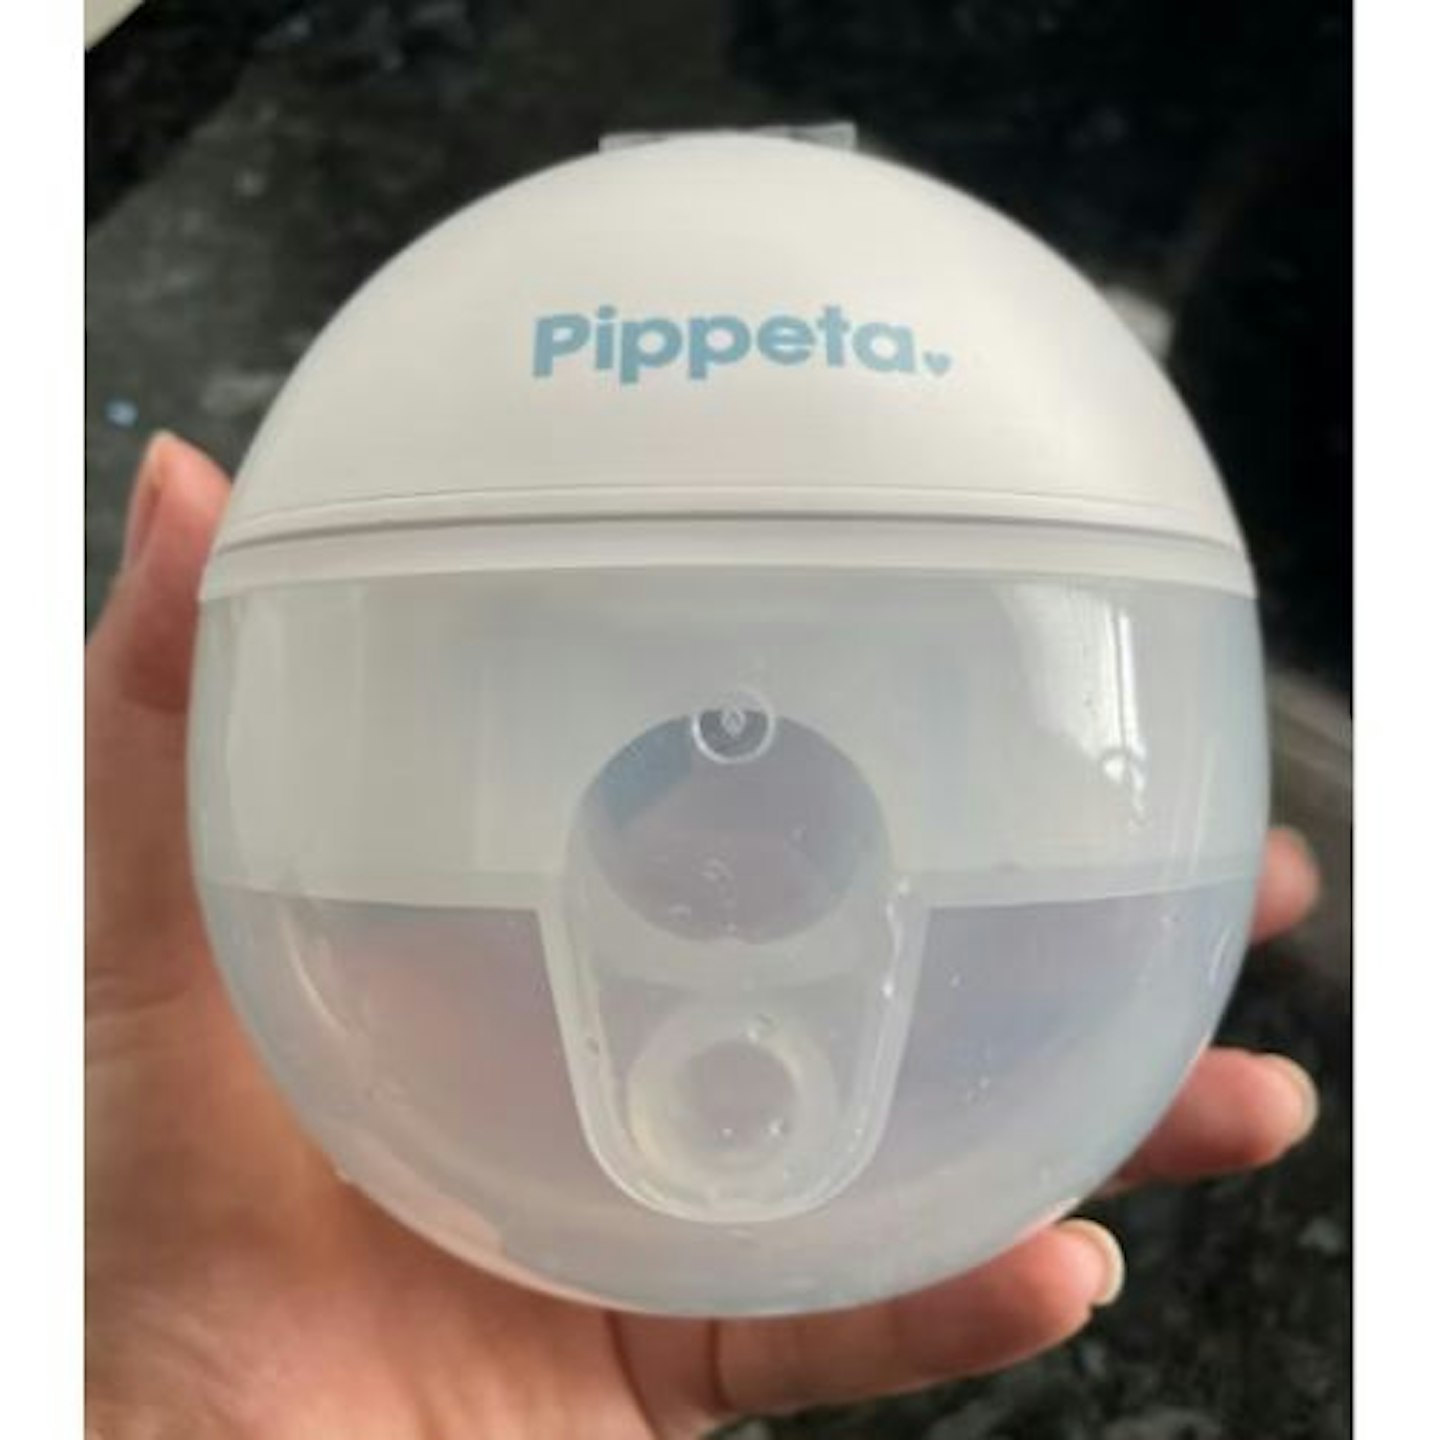 Pippeta breast pump